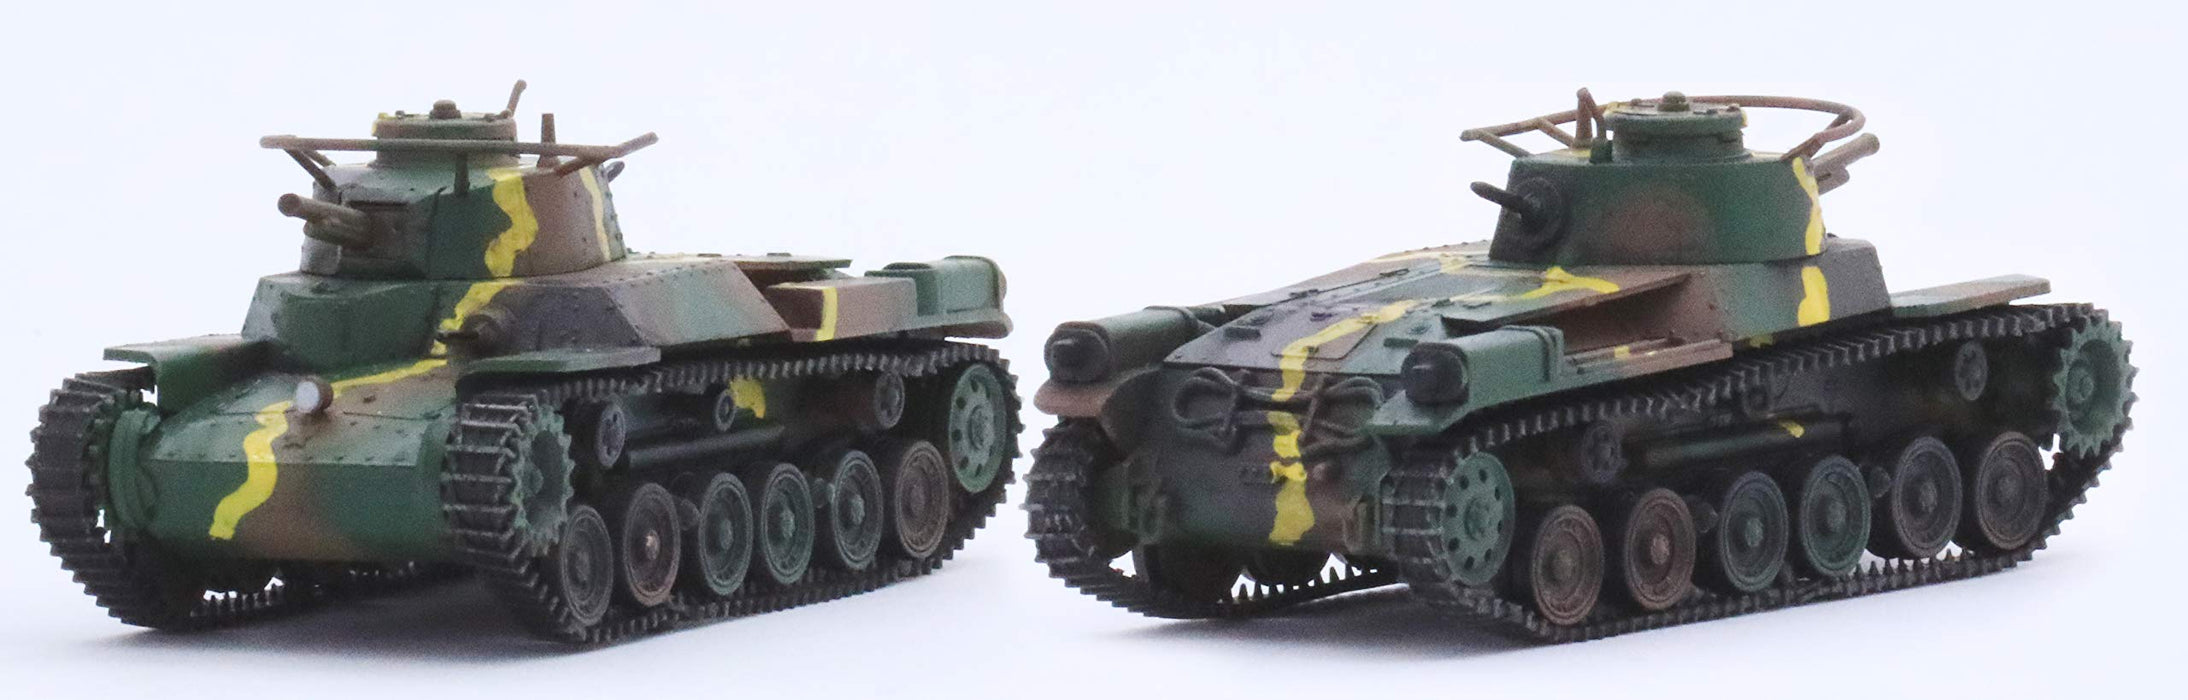 FUJIMI Swa-31 Ex-1 Type 97 Medium Tank Chi-Ha 2Pcs Special Version W/Infantry1/76 Scale Kit